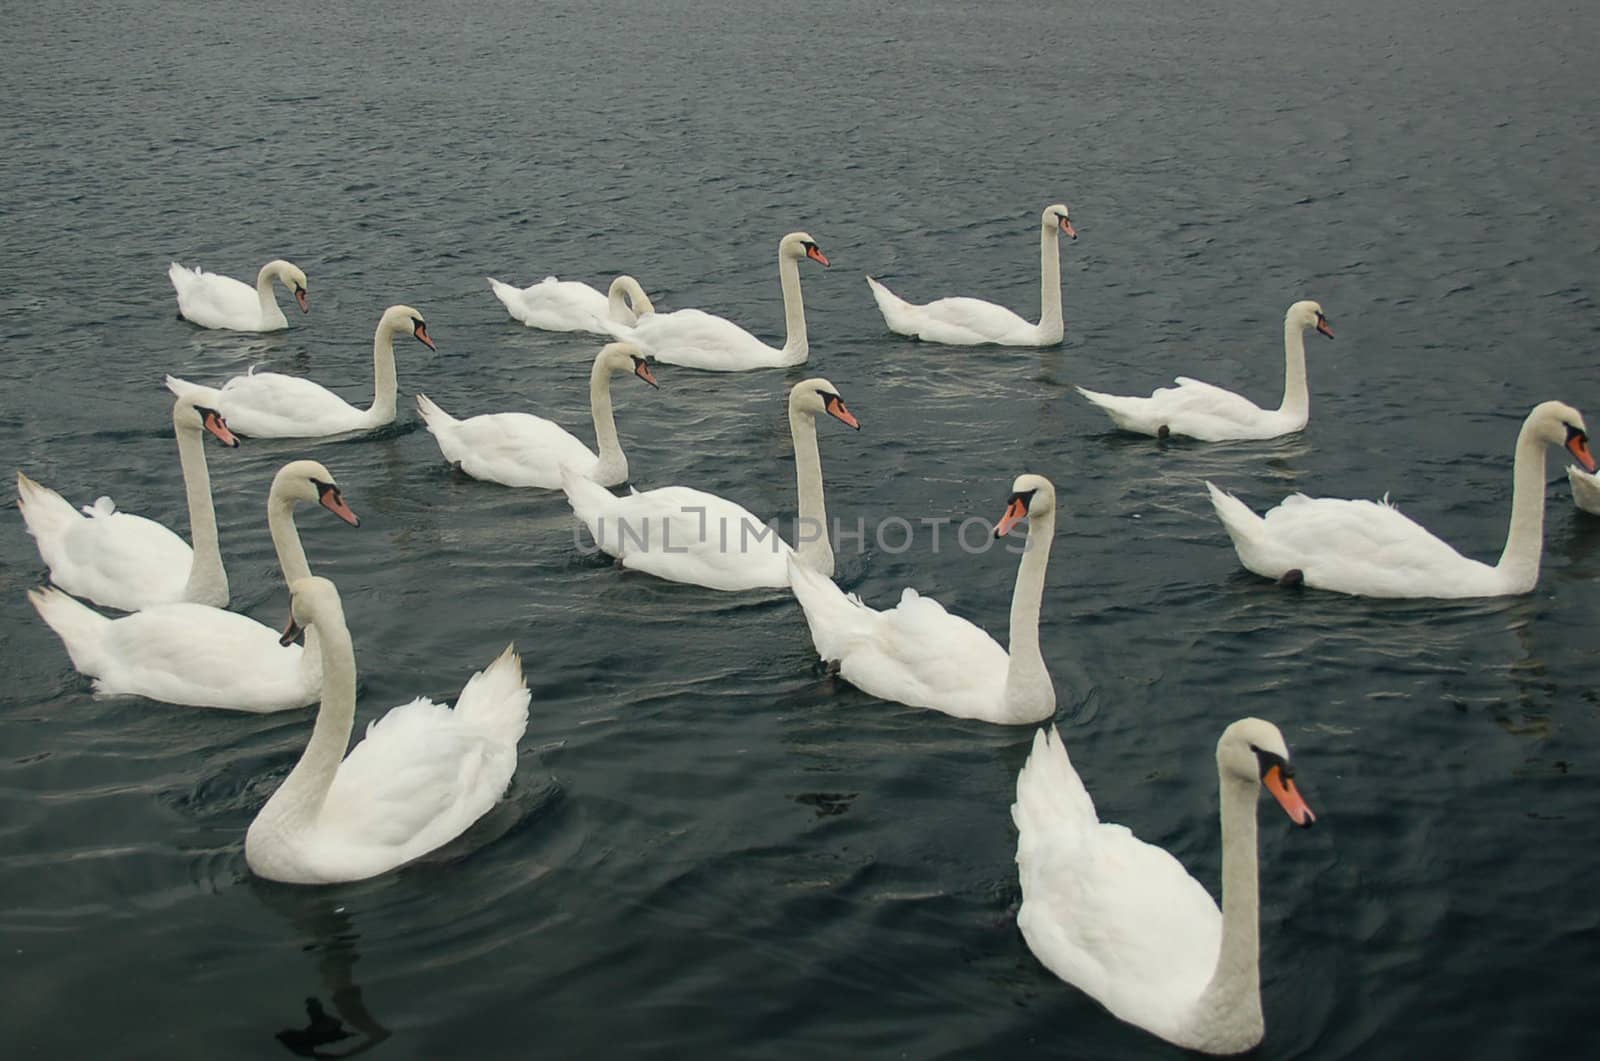 Fourteen white swans on the lake by hksjur